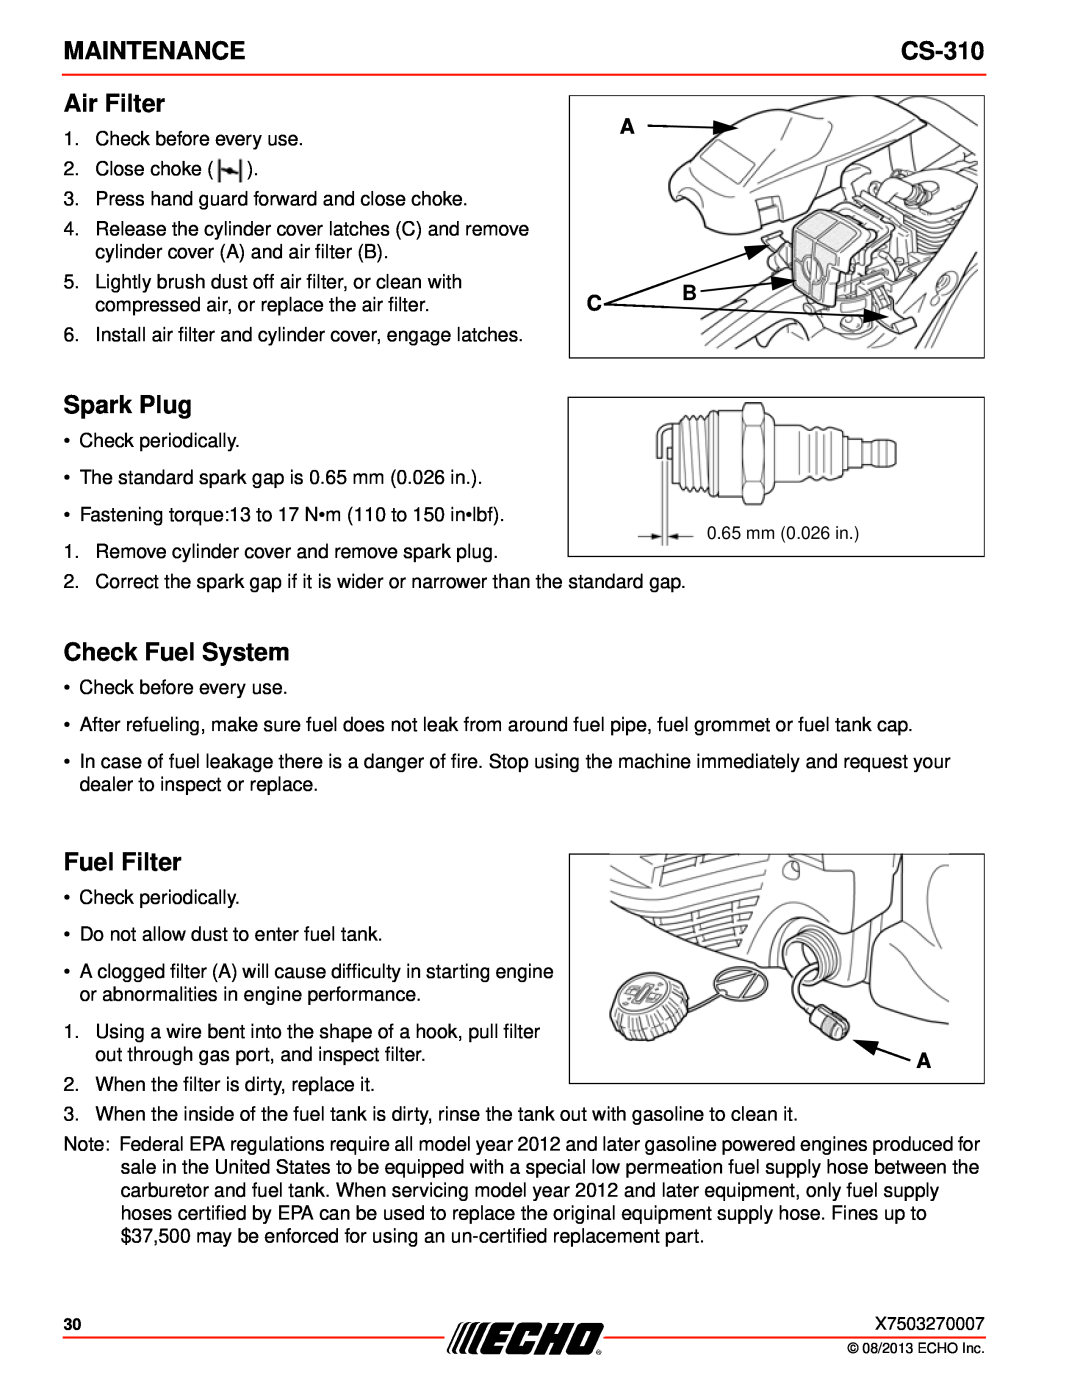 Echo CS-310 instruction manual Air Filter, Spark Plug, Check Fuel System, Fuel Filter, A C B, Maintenance 